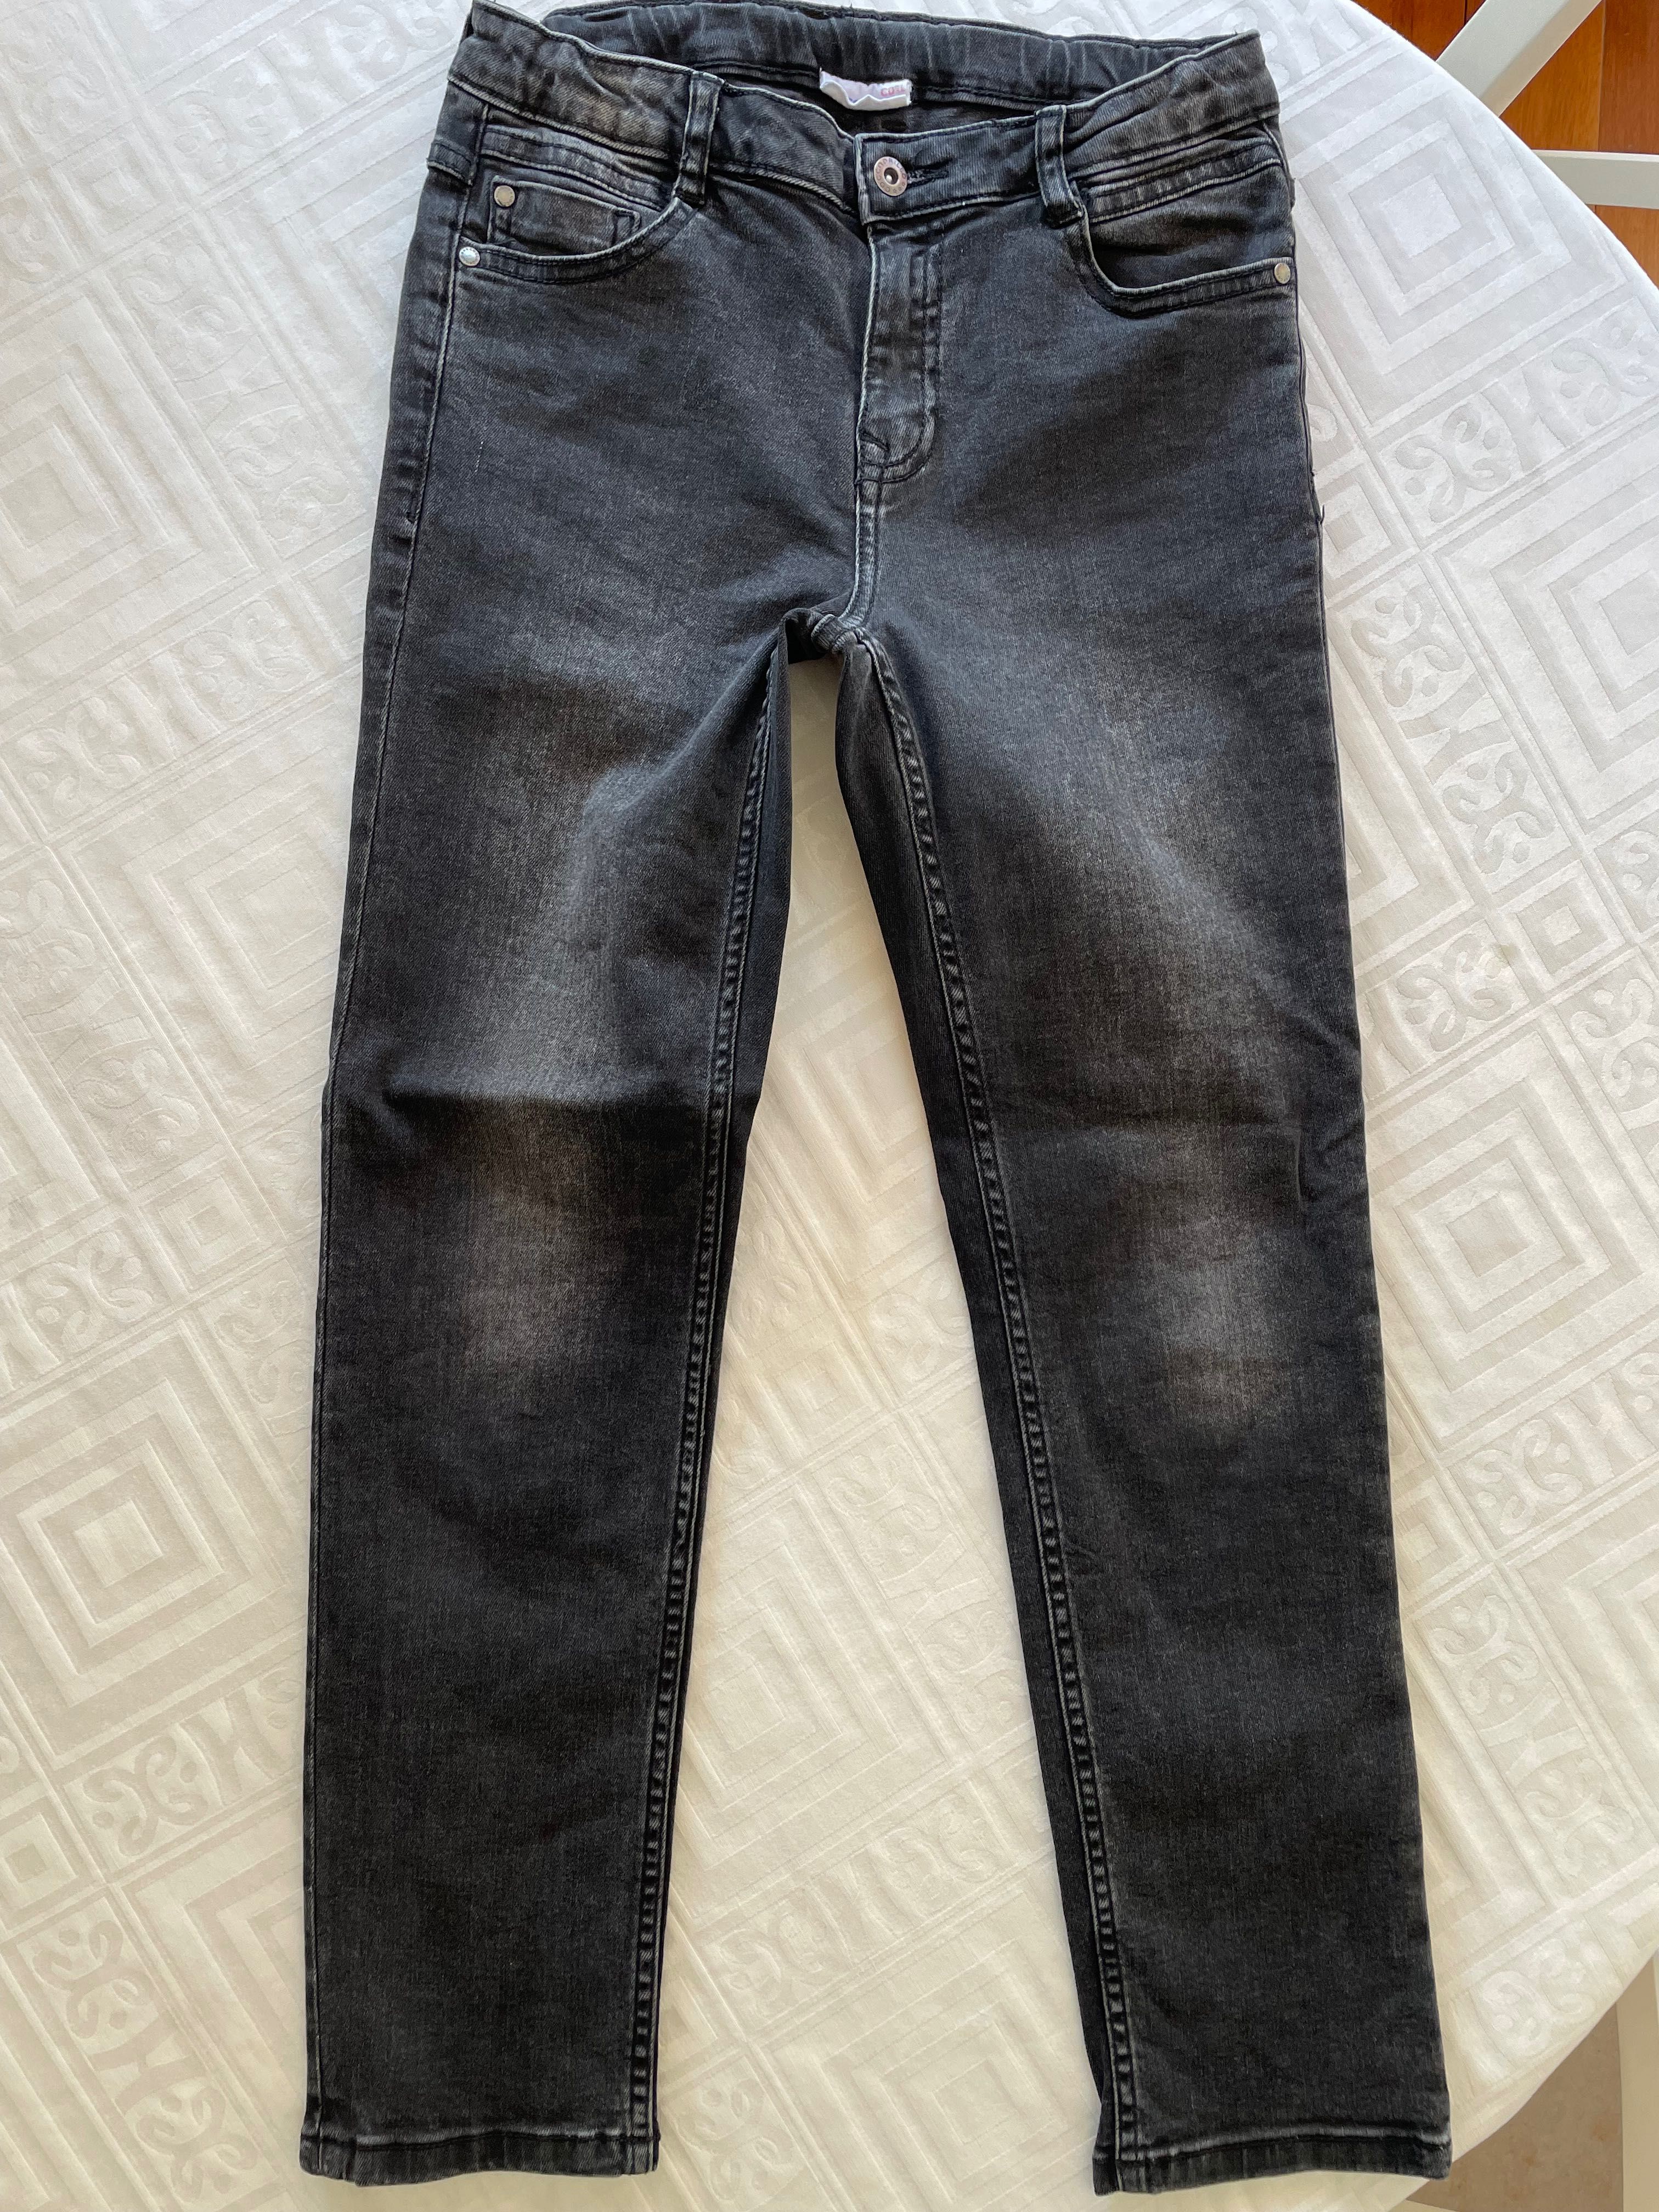 Pantaloni jeansi negri,cocodrilo,11 ani